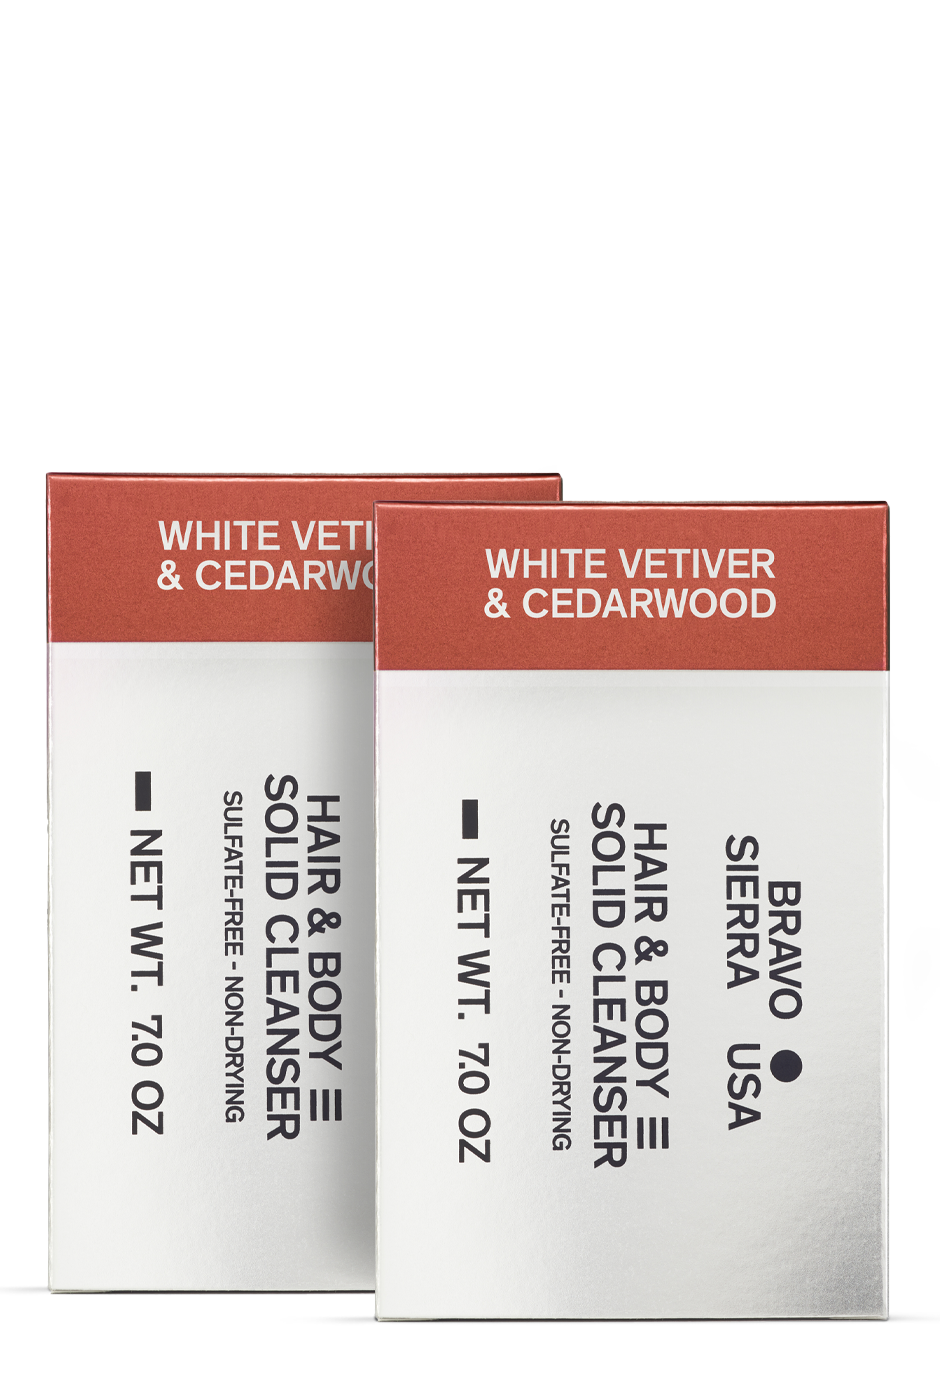 WHITE VETIVER & CEDARWOOD SOLID CLEANSER - 2 PACK